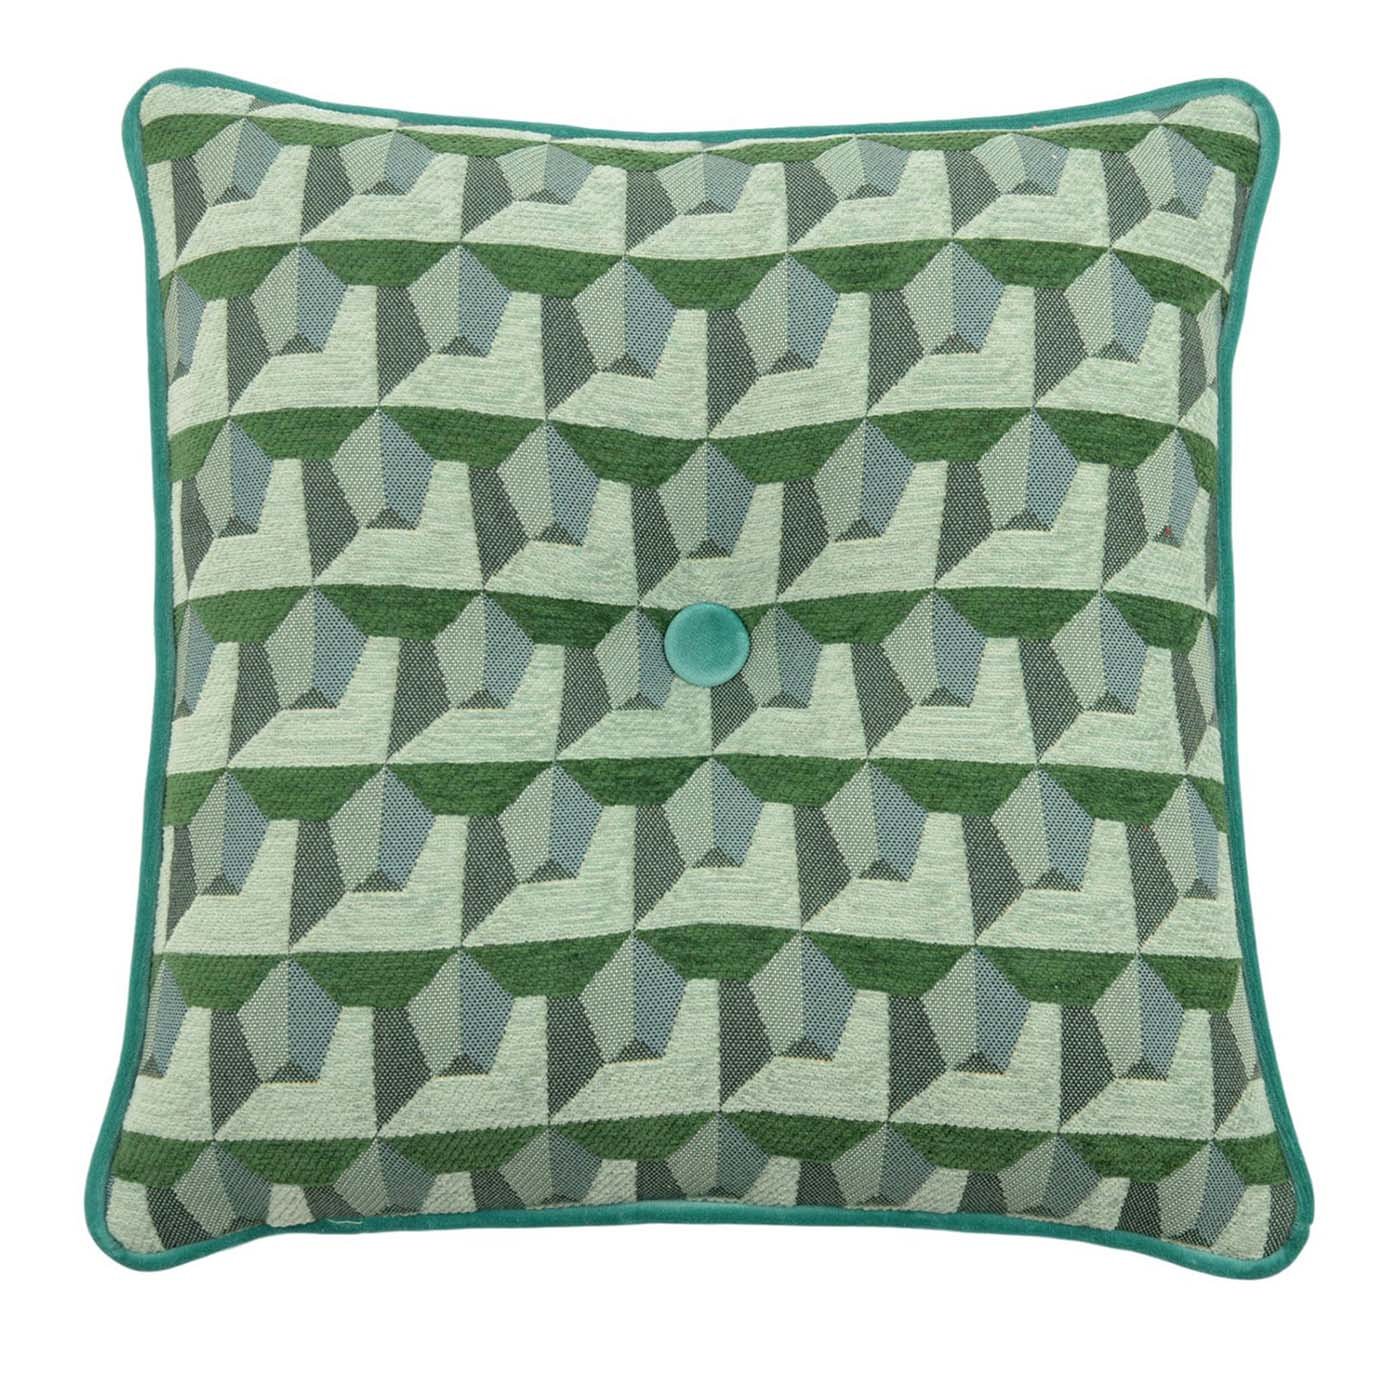 Green Carrè Cushion in geometric jacquard fabric - Main view